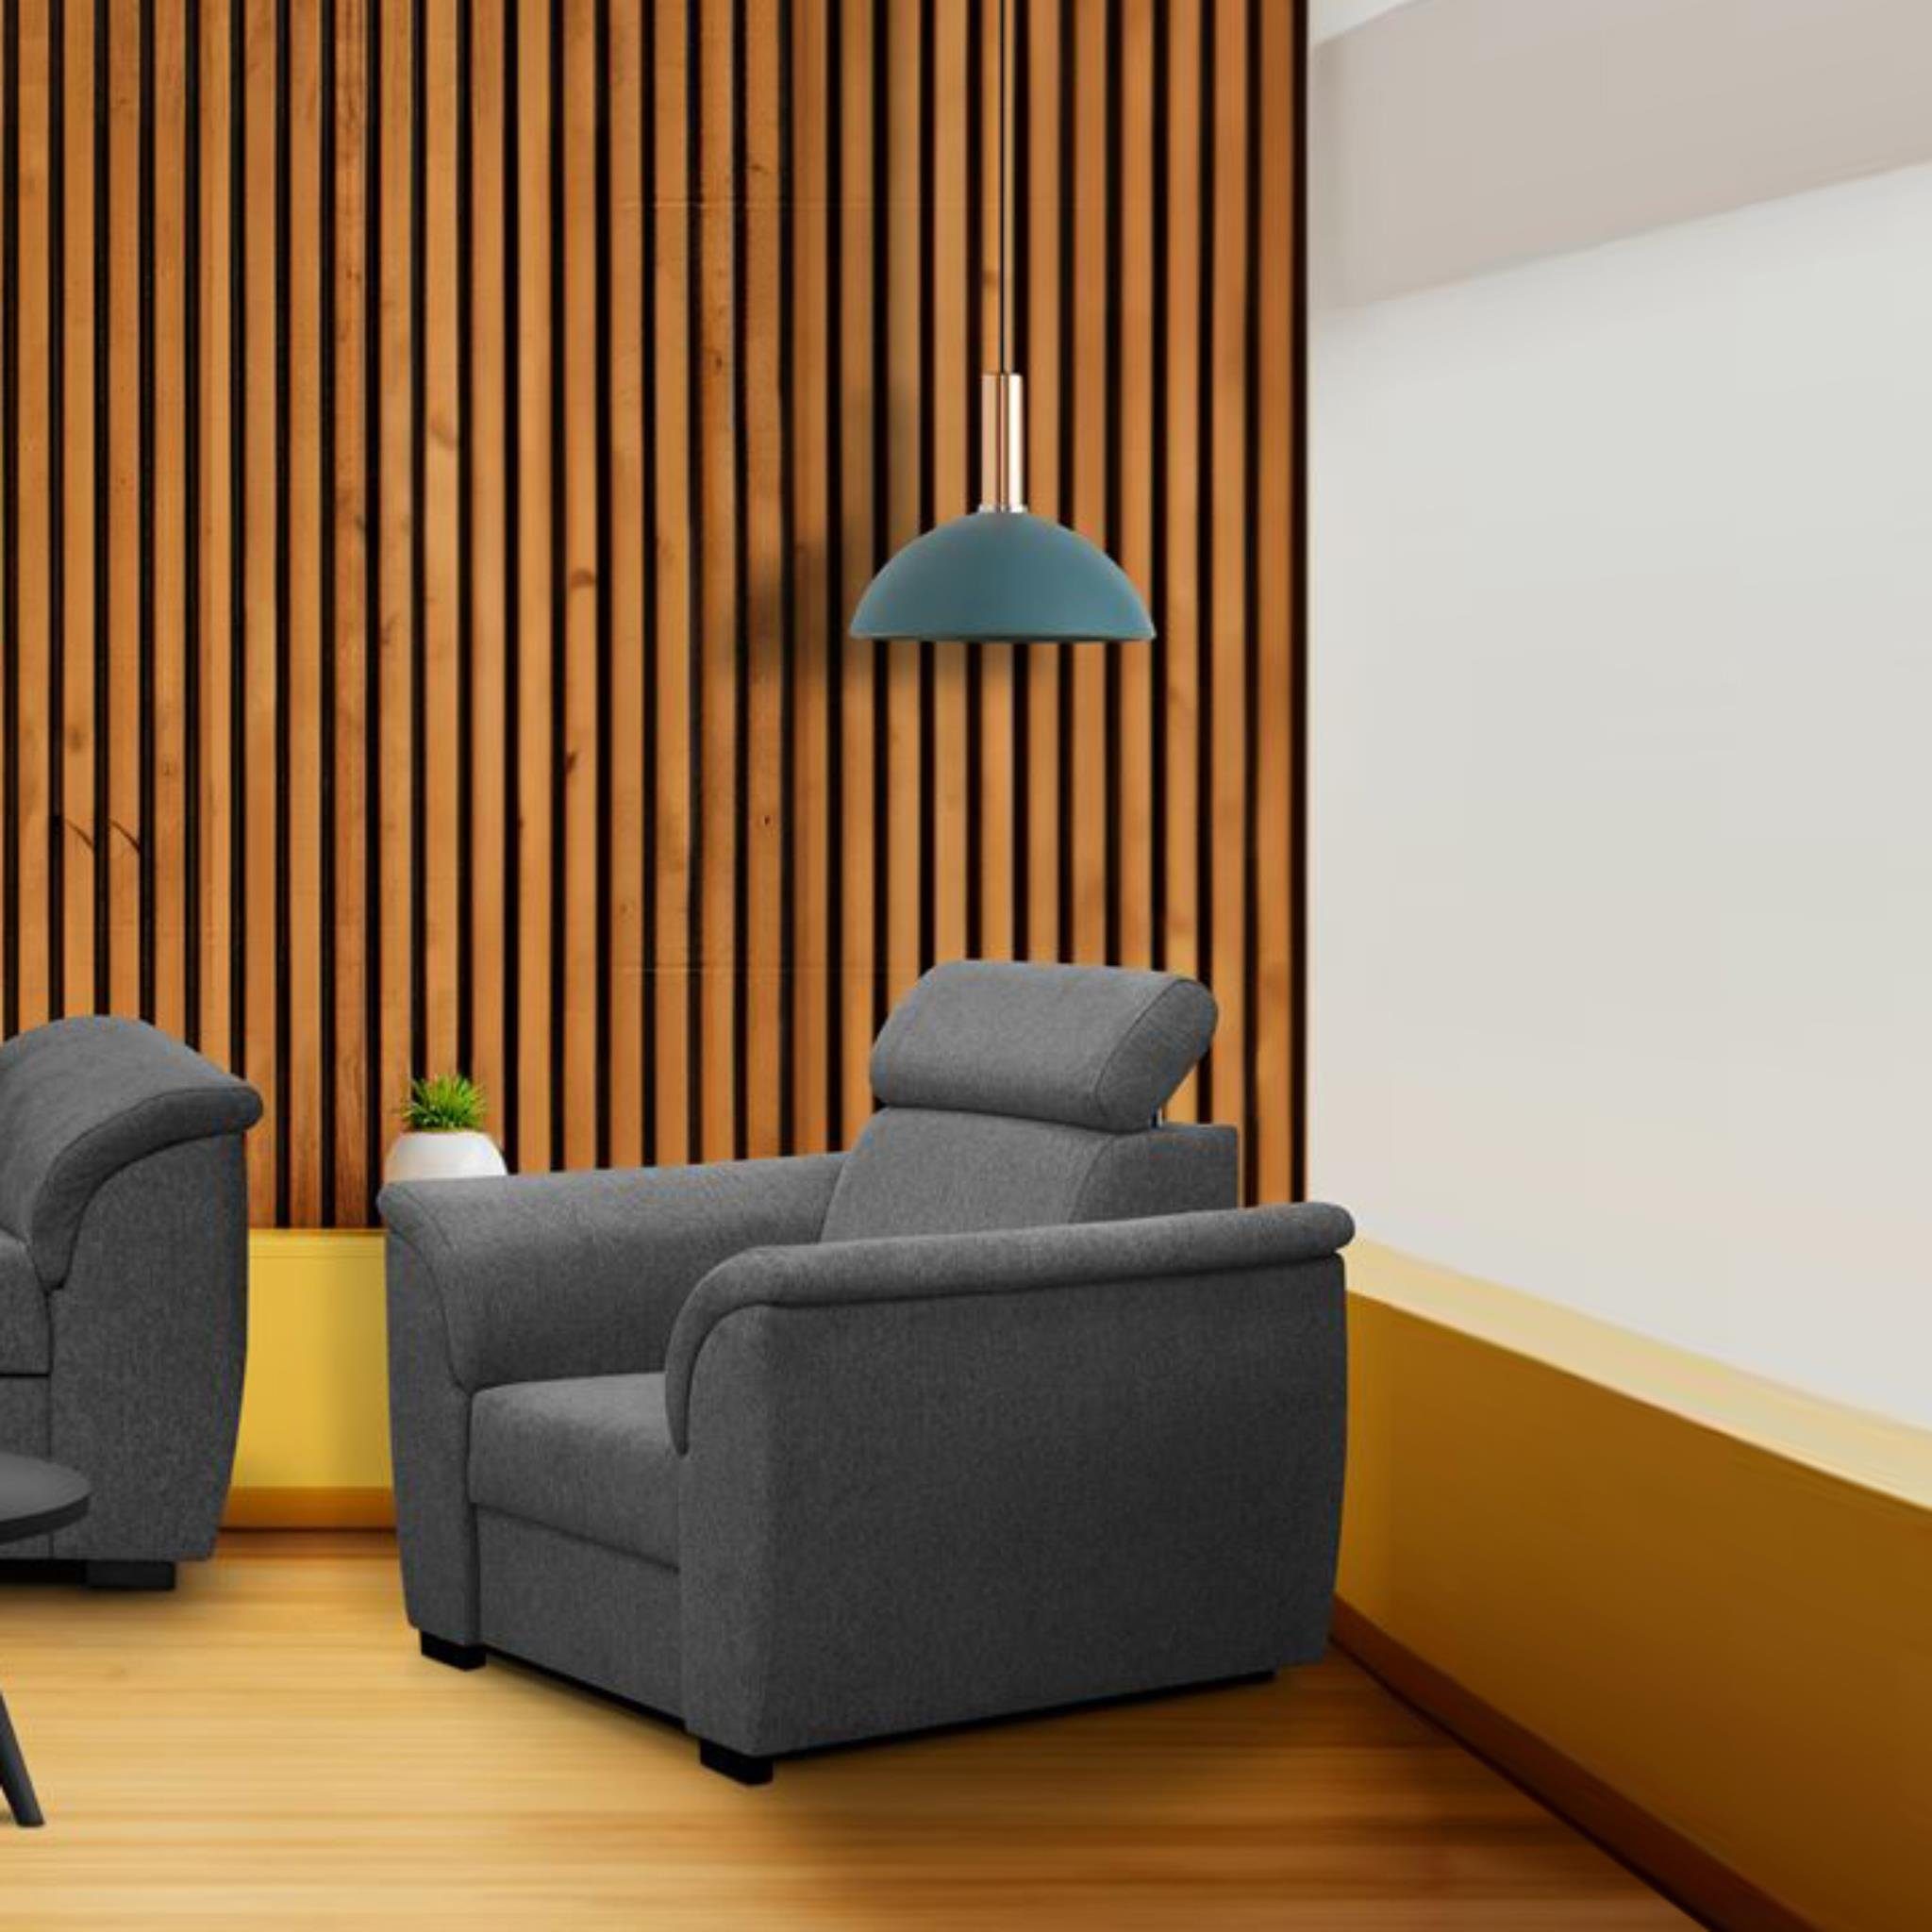 Beautysofa Relaxsessel Madera (modern Lounge Polstersessel mit Wellenfedern), stilvoll Sessel mit verstellbare Kopfstütze Dunkelgrau (matana 05) | Sessel